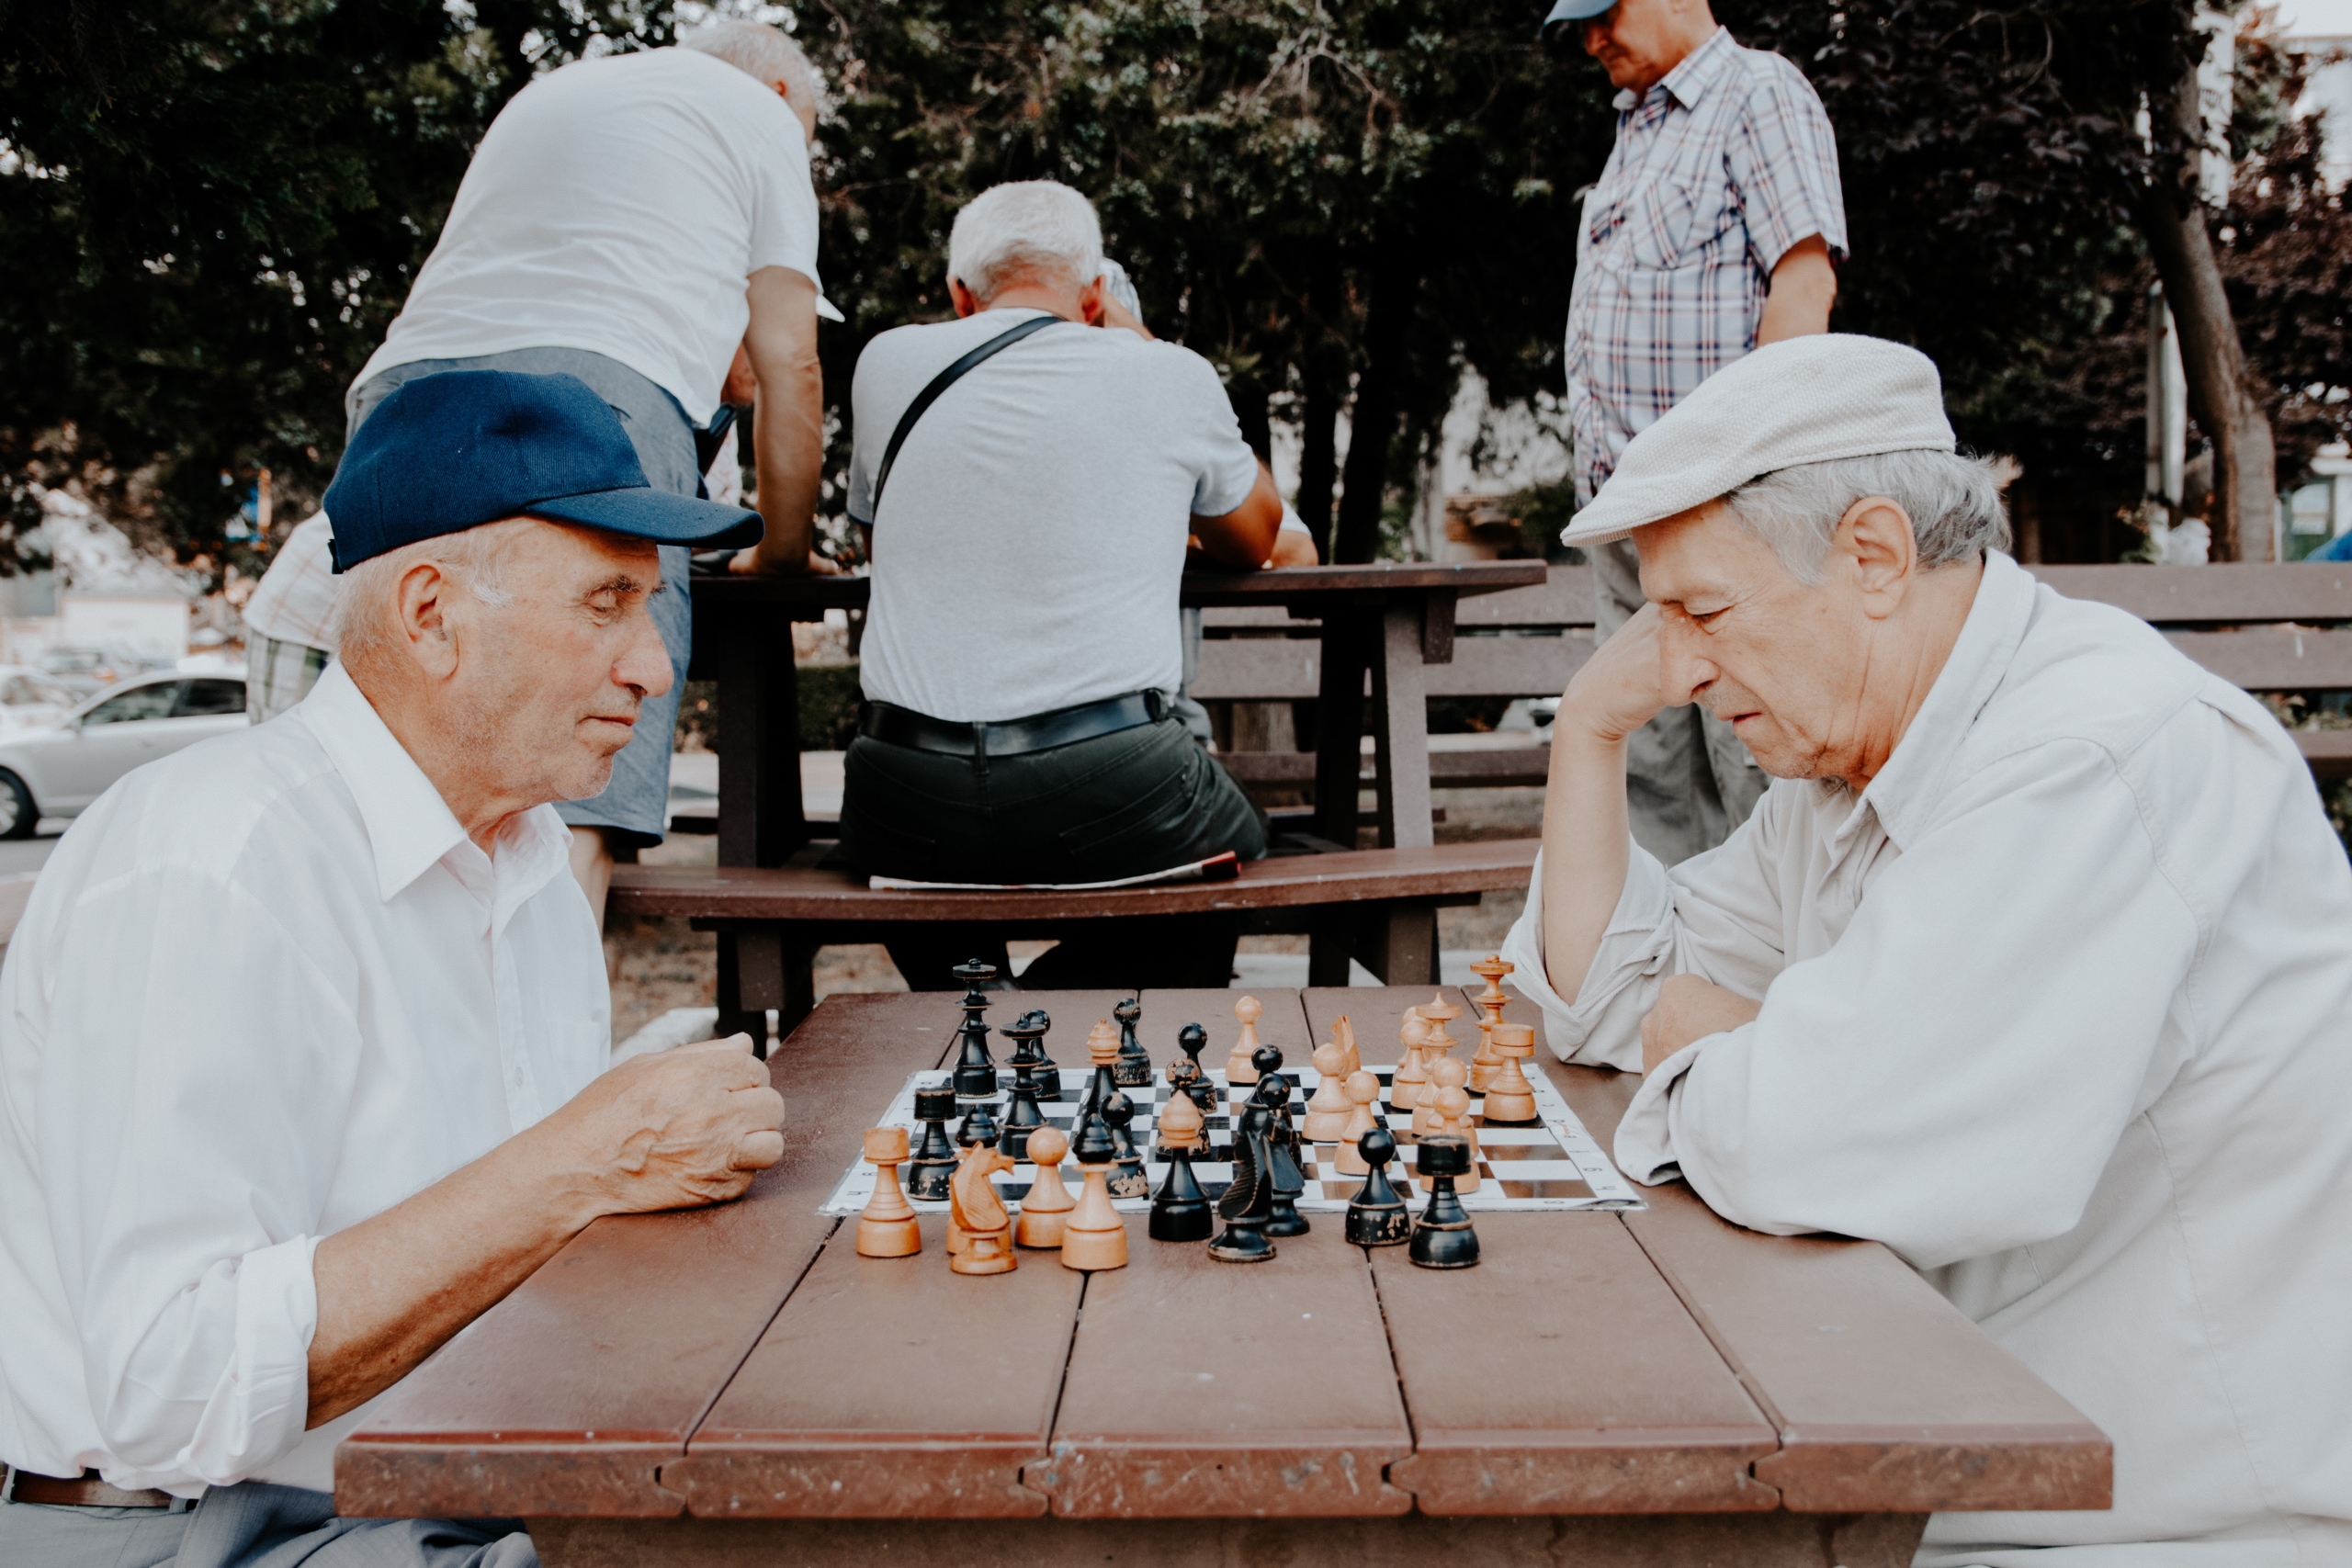 friendships in retirement